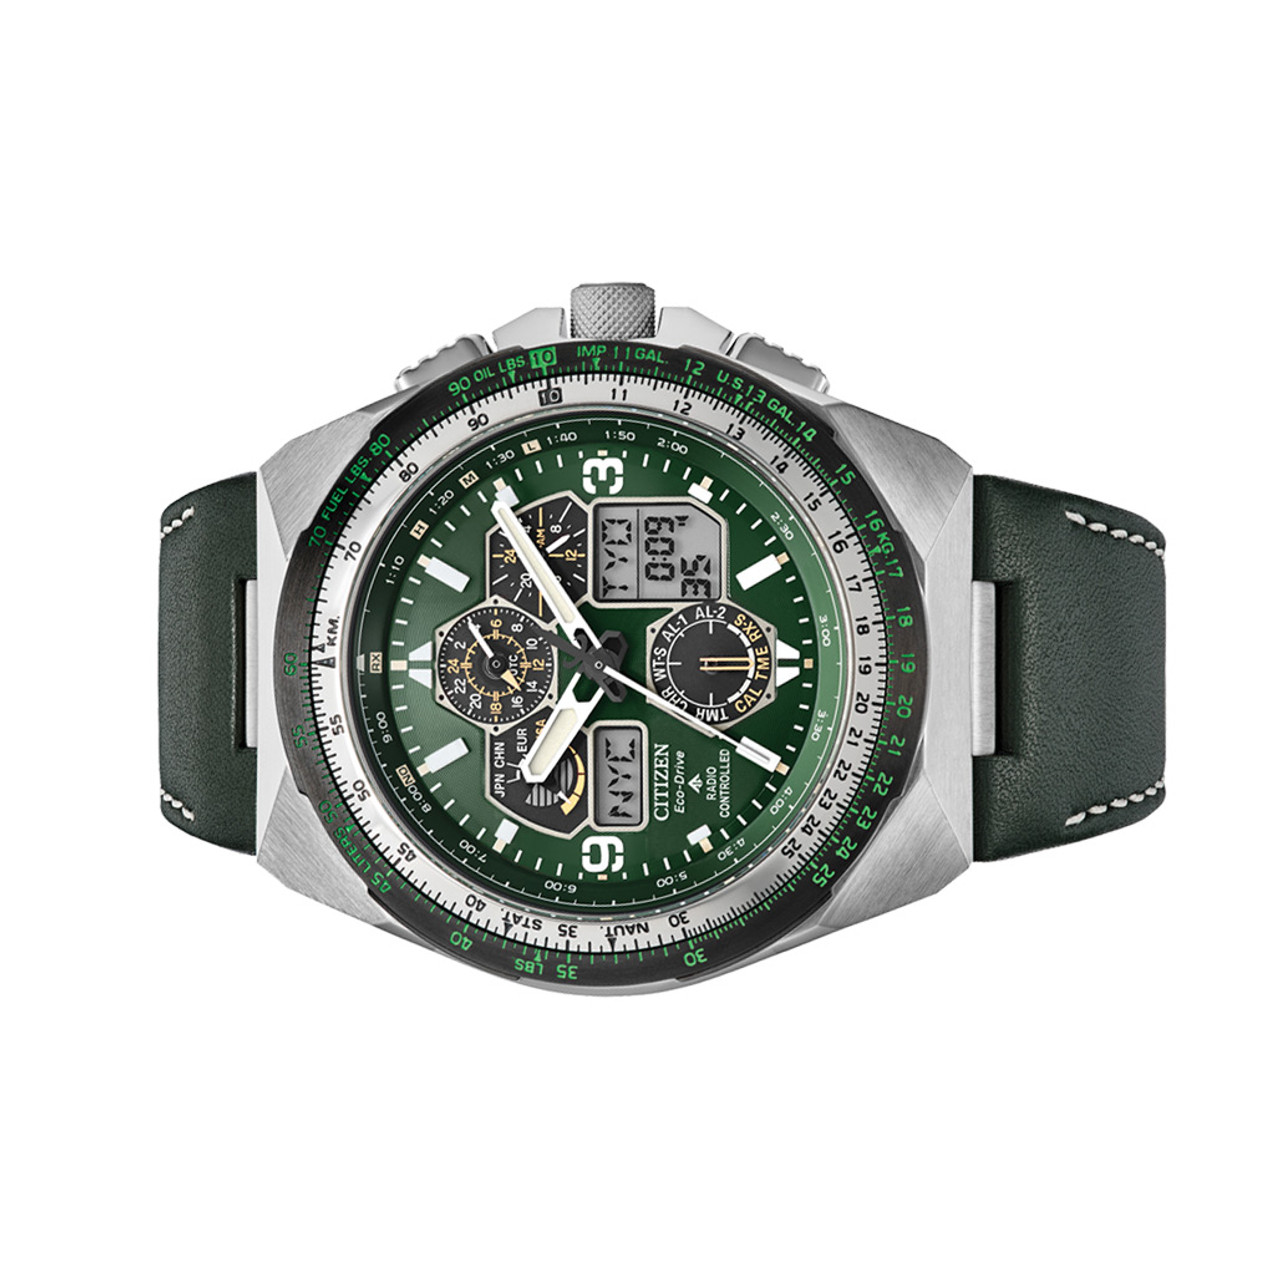 Citizen Promaster Skyhawk A-T Solar Watch with Green Dial #JY8147-01X